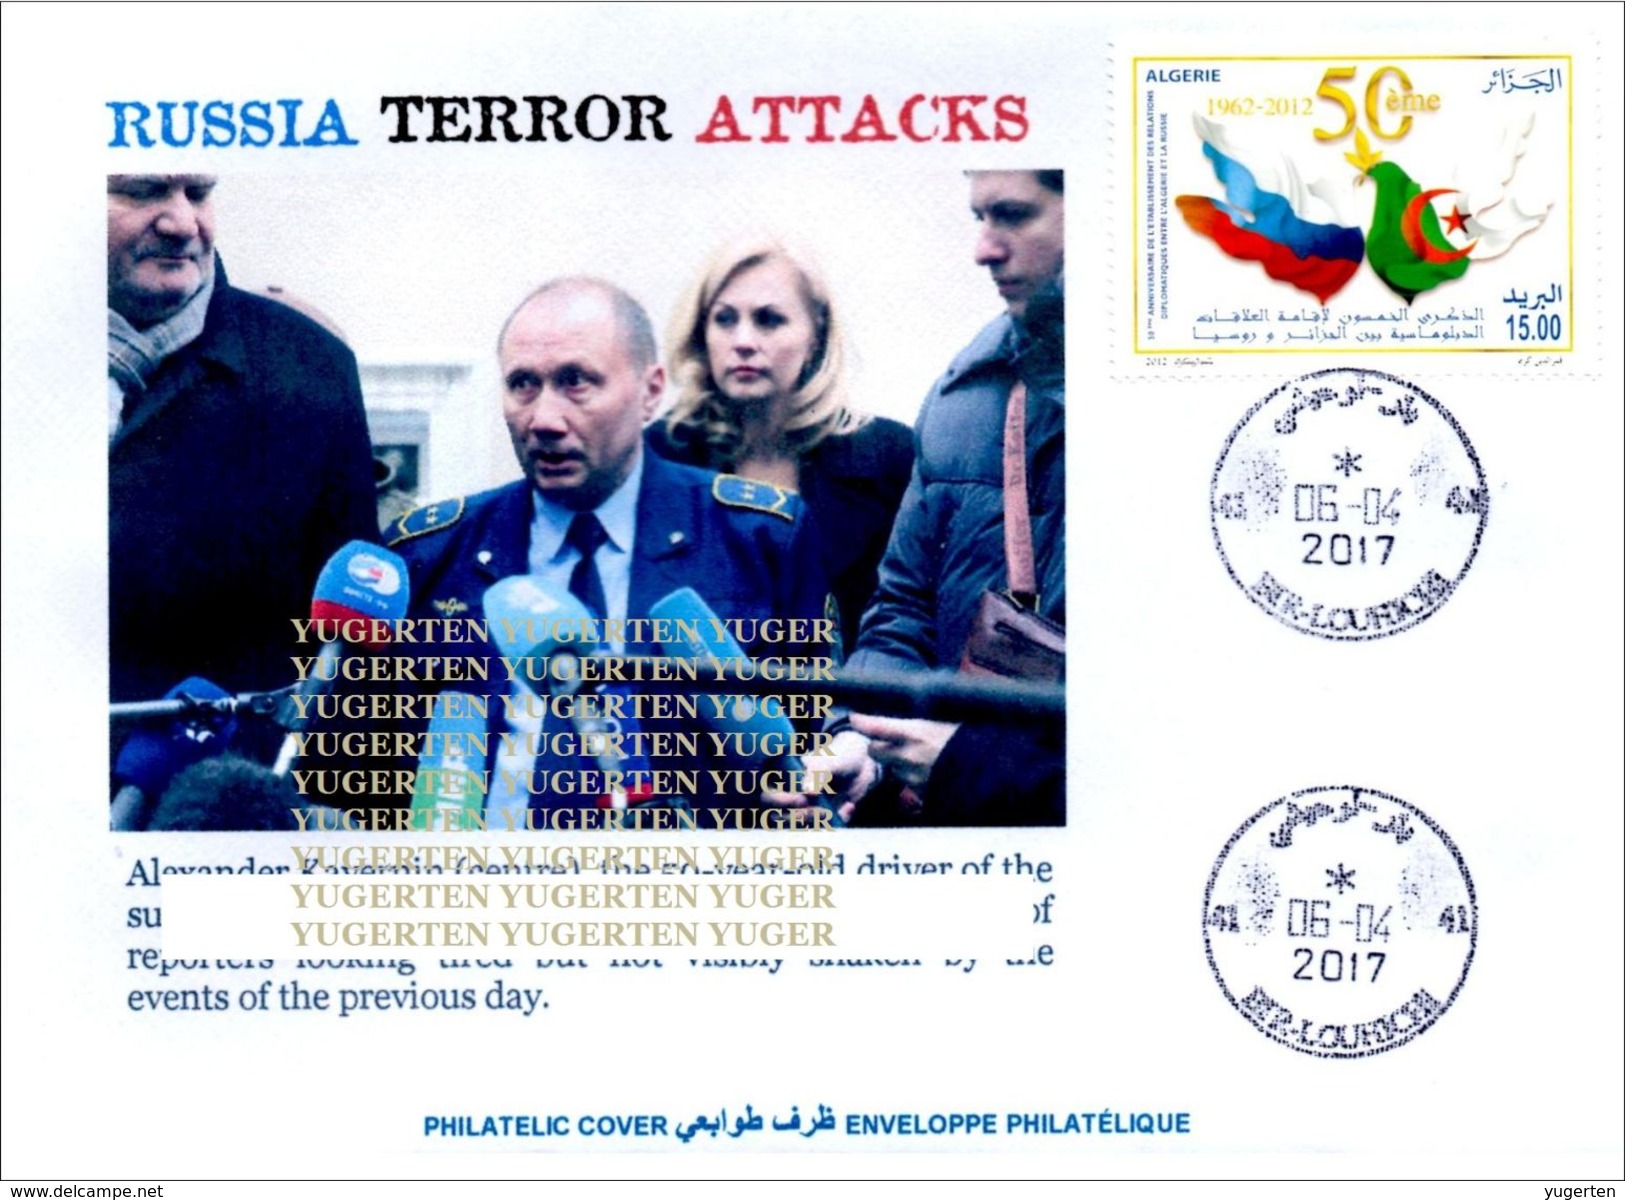 ALGHERIA 2017 Cover St Petersburg Metro Terrorist Attacks - Cancelled Date Of Attacks Terrorism Russia Putin Poutine - Enveloppes